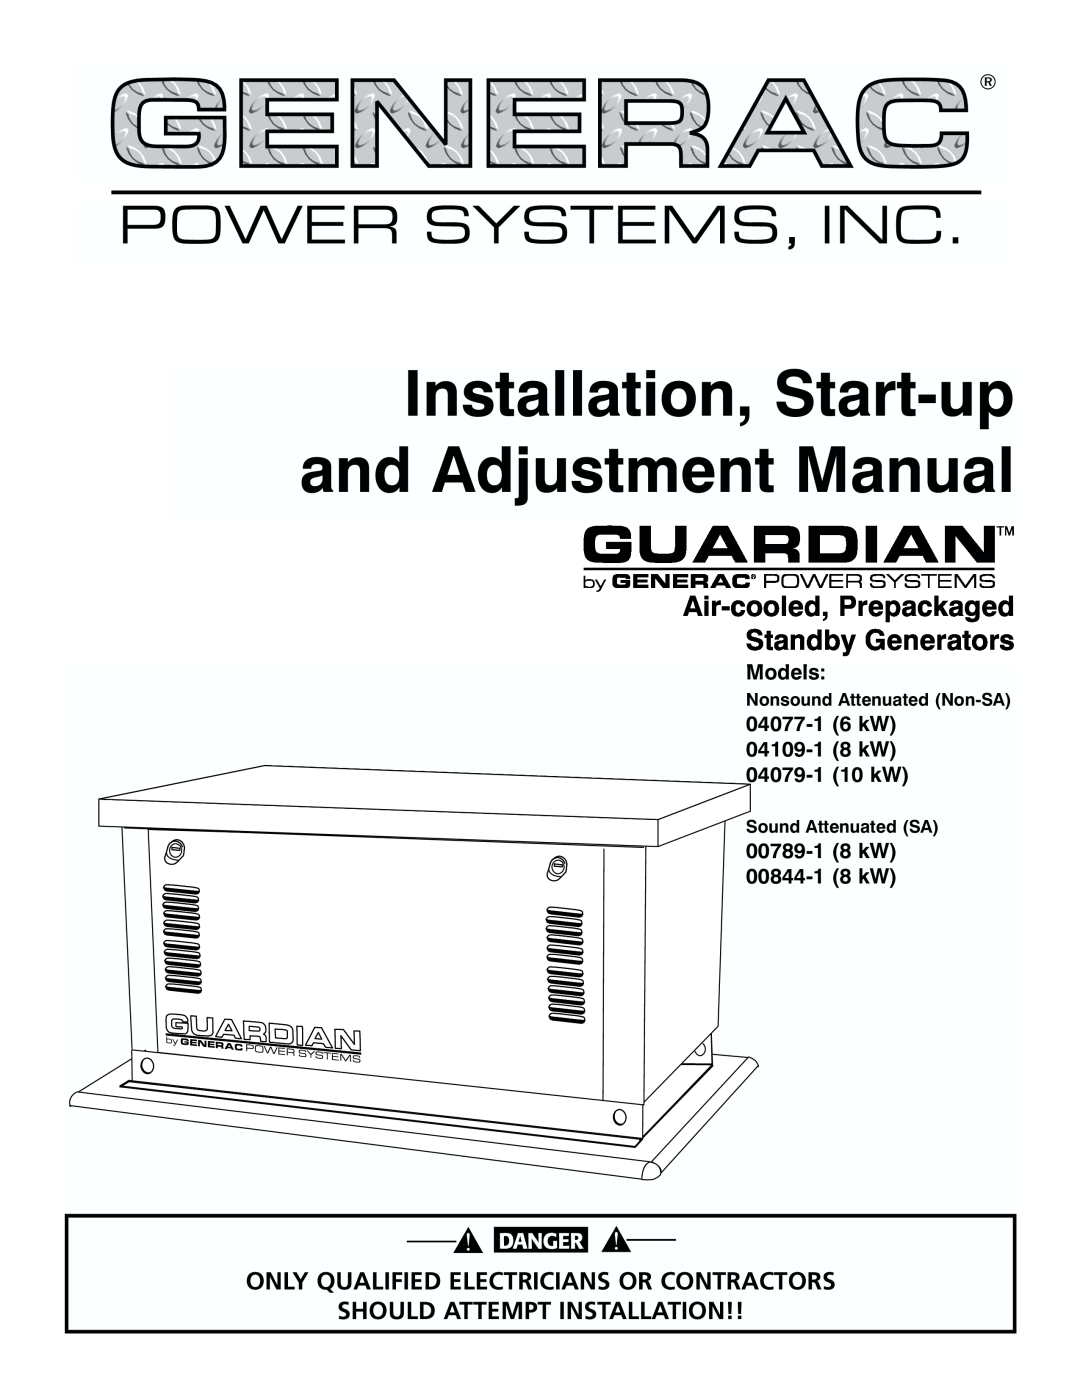 Generac 04077-1, 04109-1, 04079-1, 00789-1, 00844-1 manual Installation, Start-upand Adjustment Manual, Power Systems, Inc 